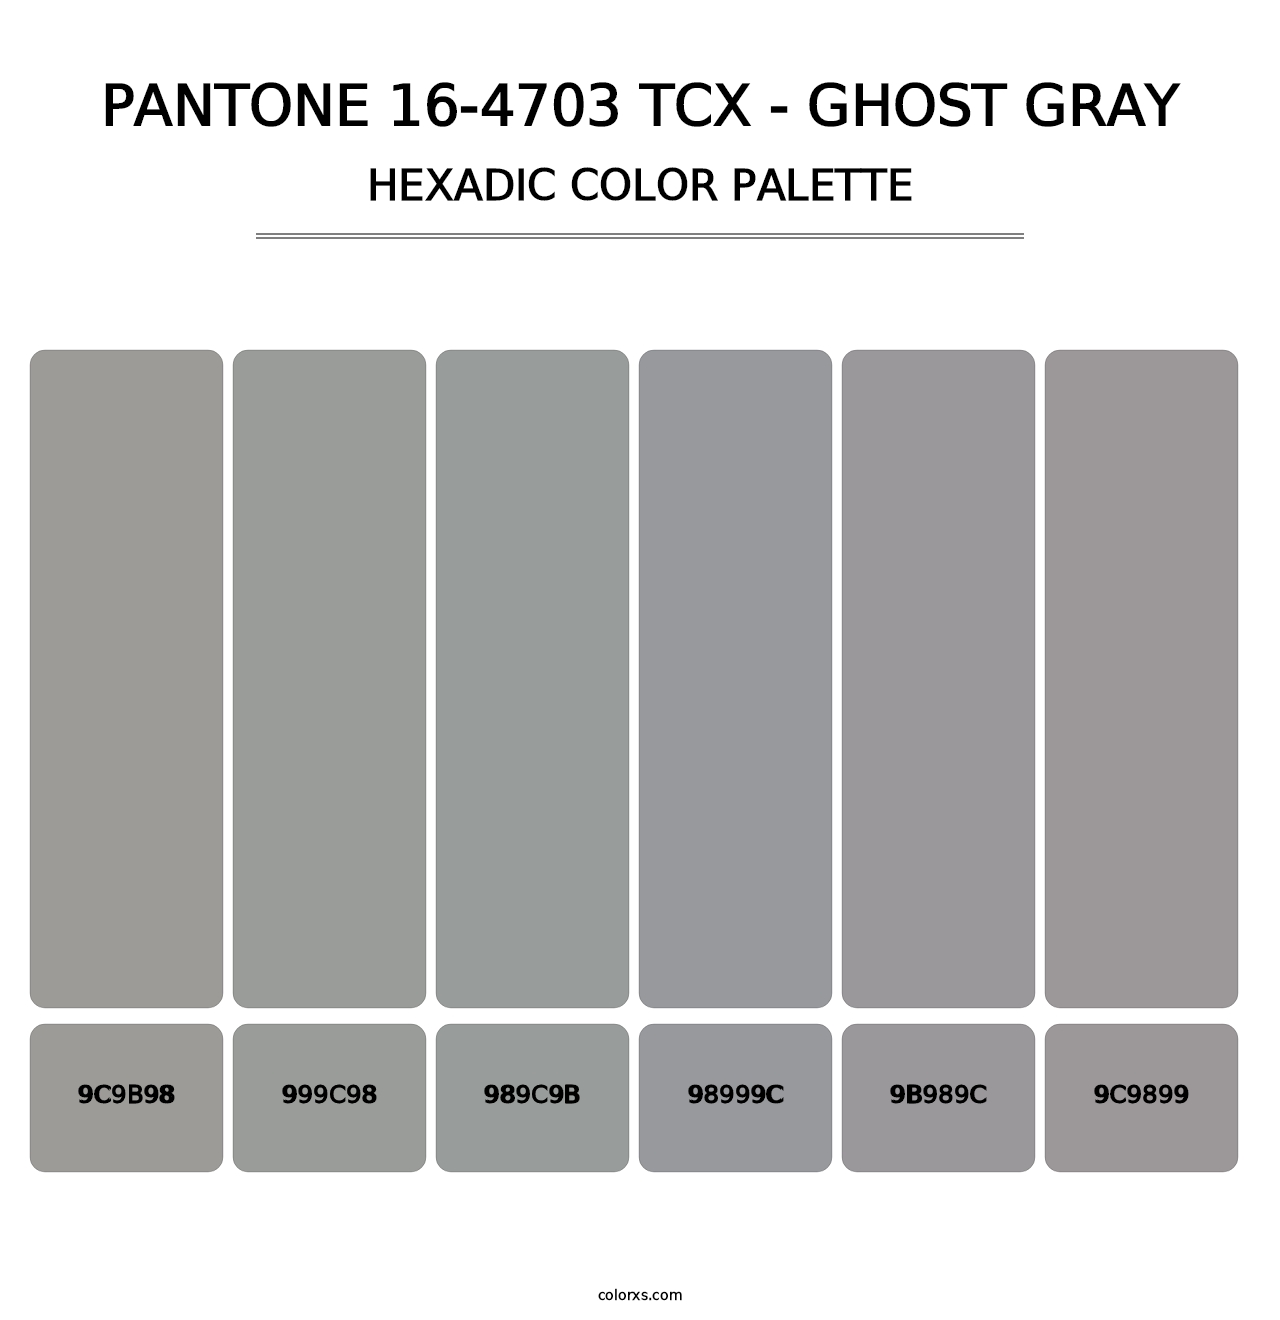 PANTONE 16-4703 TCX - Ghost Gray - Hexadic Color Palette